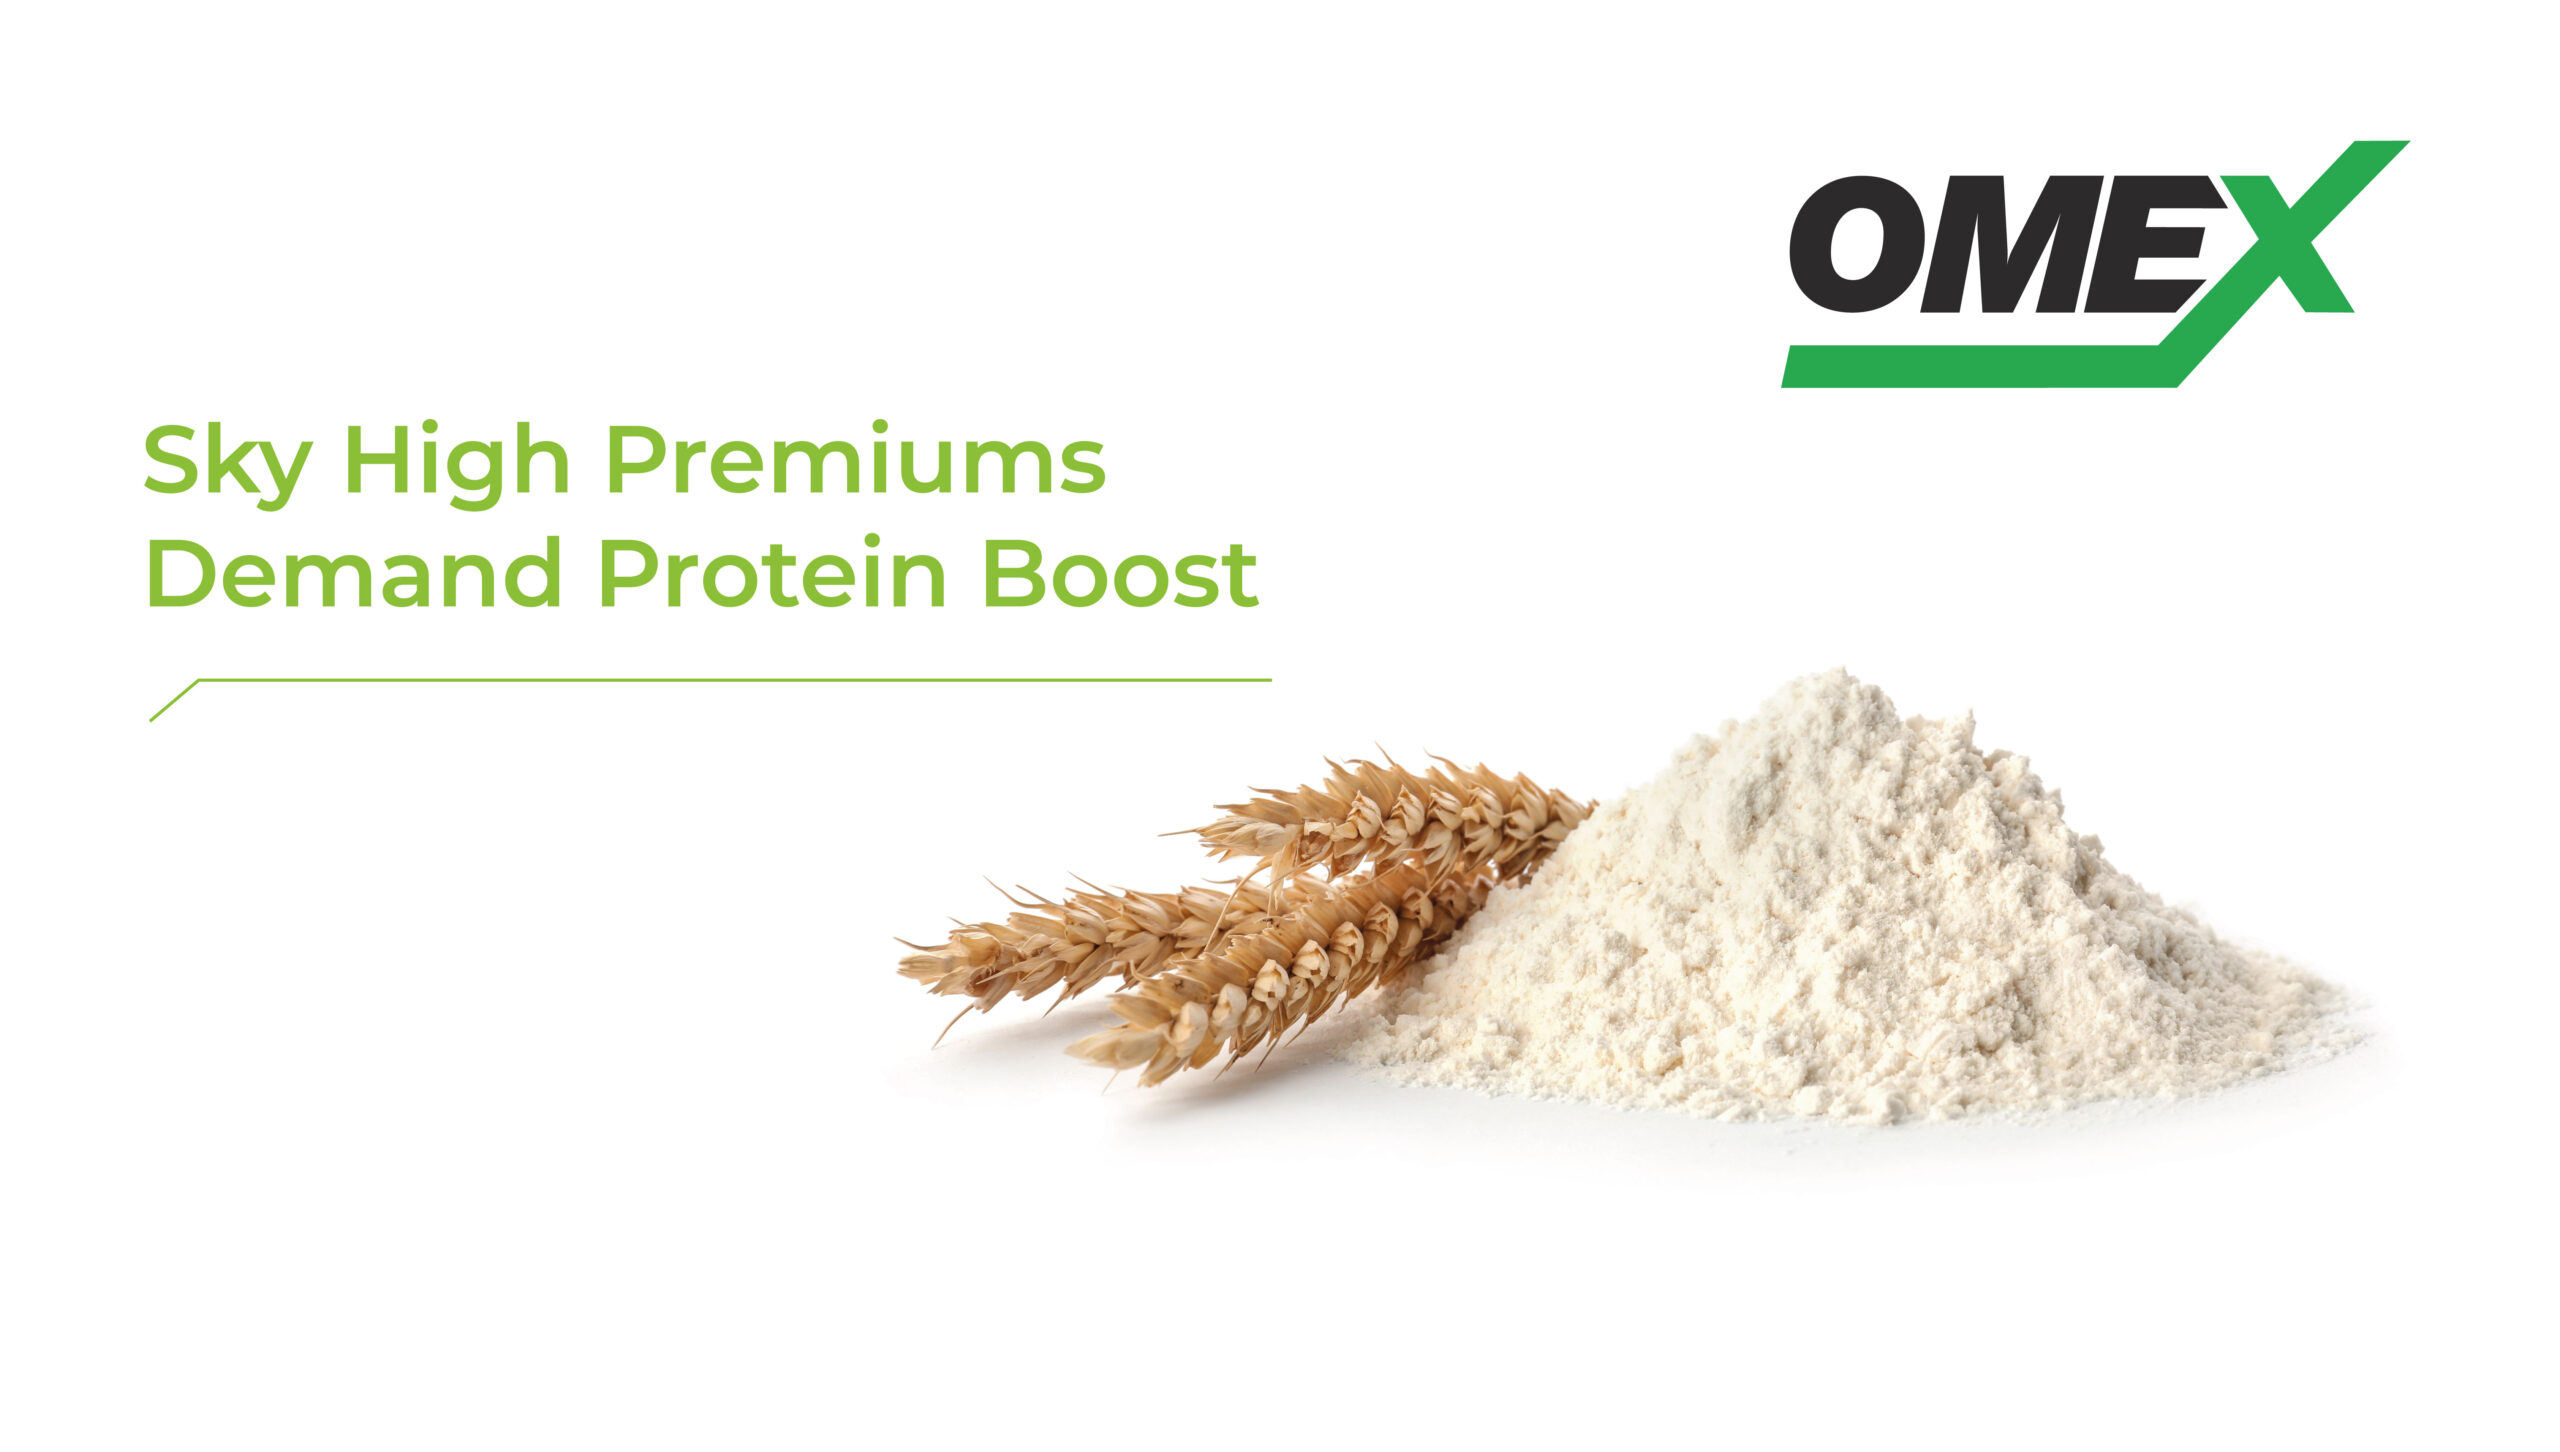 Sky High Premiums Demand Protein Boost